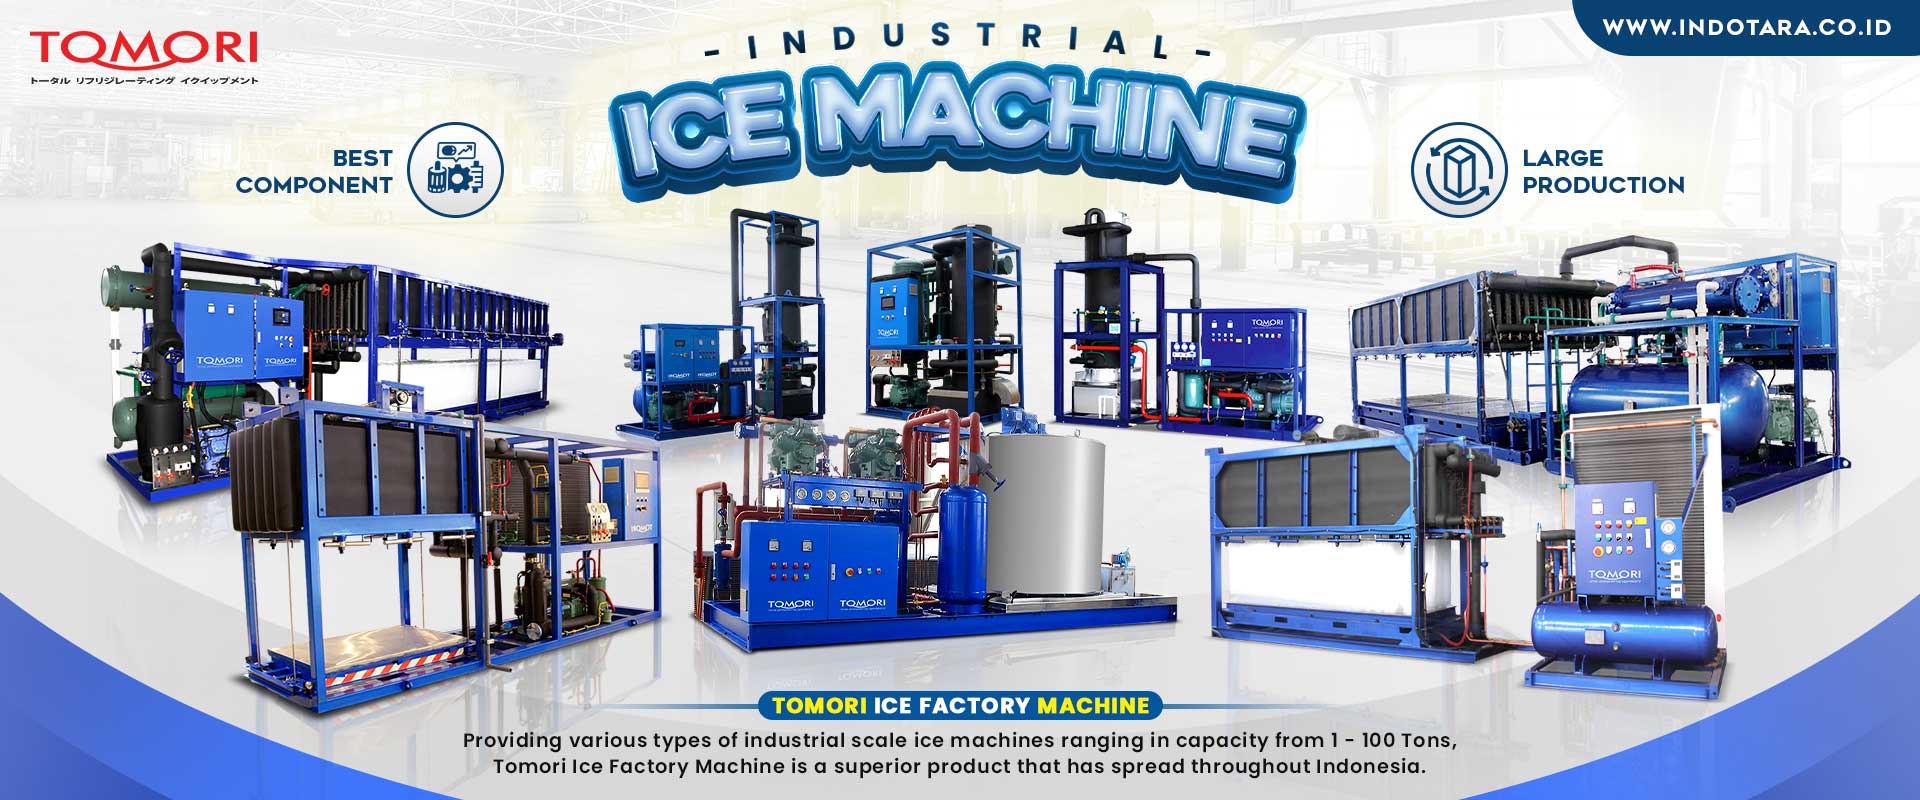 Jual Tomori Industrial Flakes Ice Machine